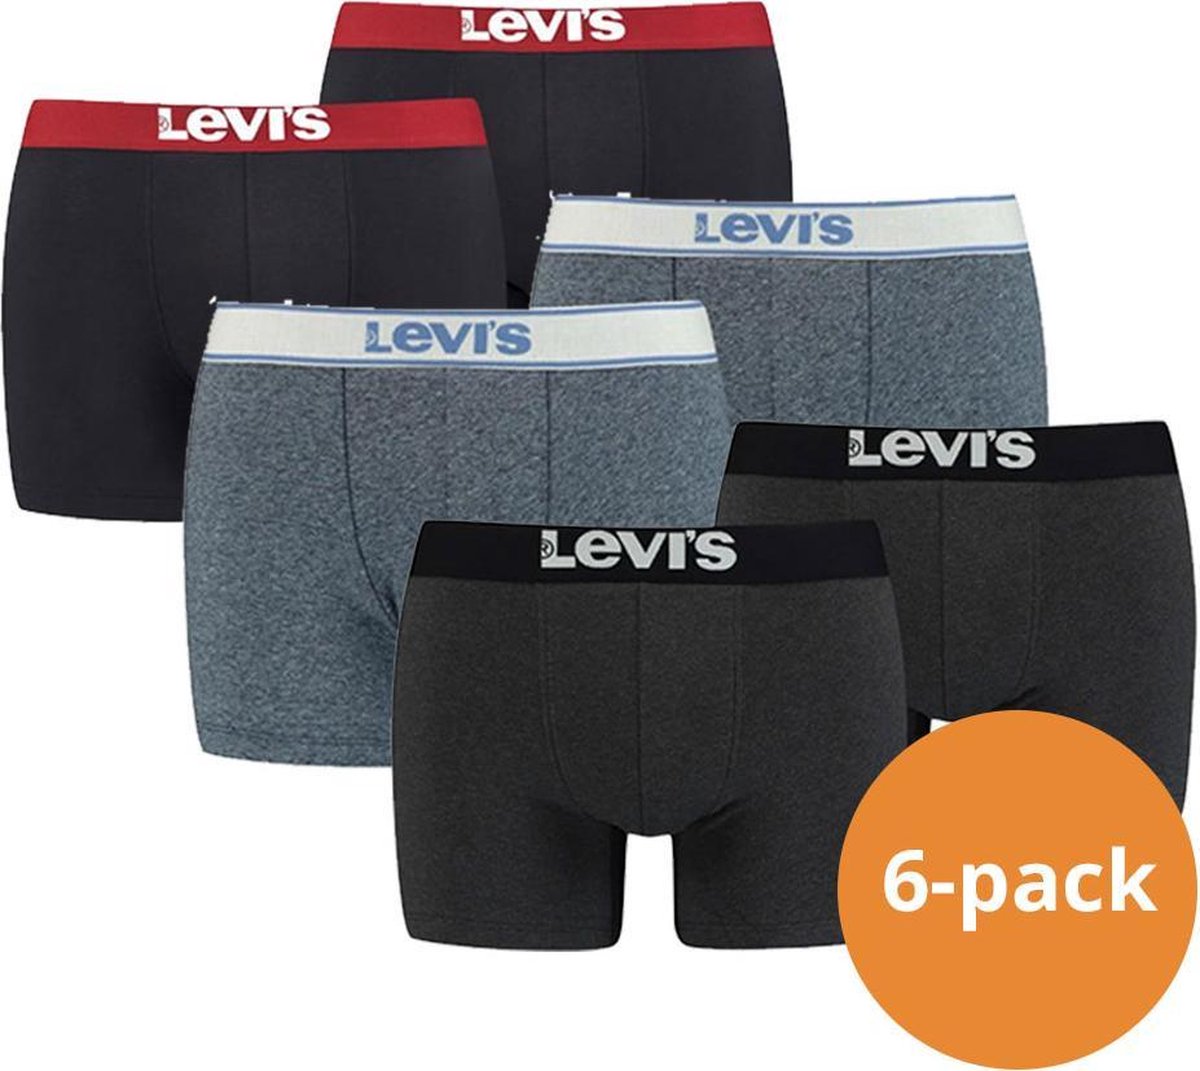 Levi's Boxershorts - 6-pack Verrassingspakket - Levi's heren ondergoed Mixed pakket - Maat M - Levi's